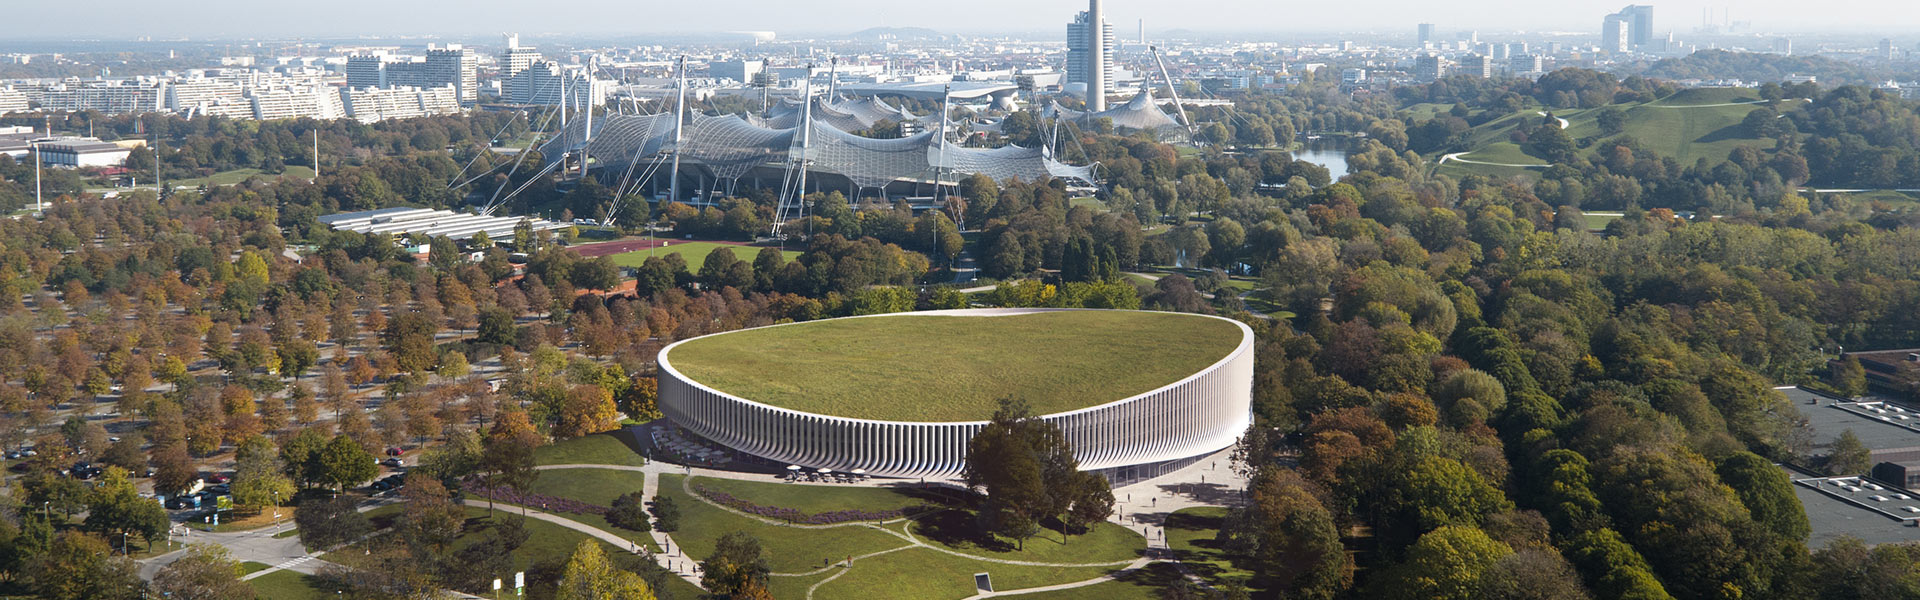 Aerial view of newly named SAP Garden stadium in Munich